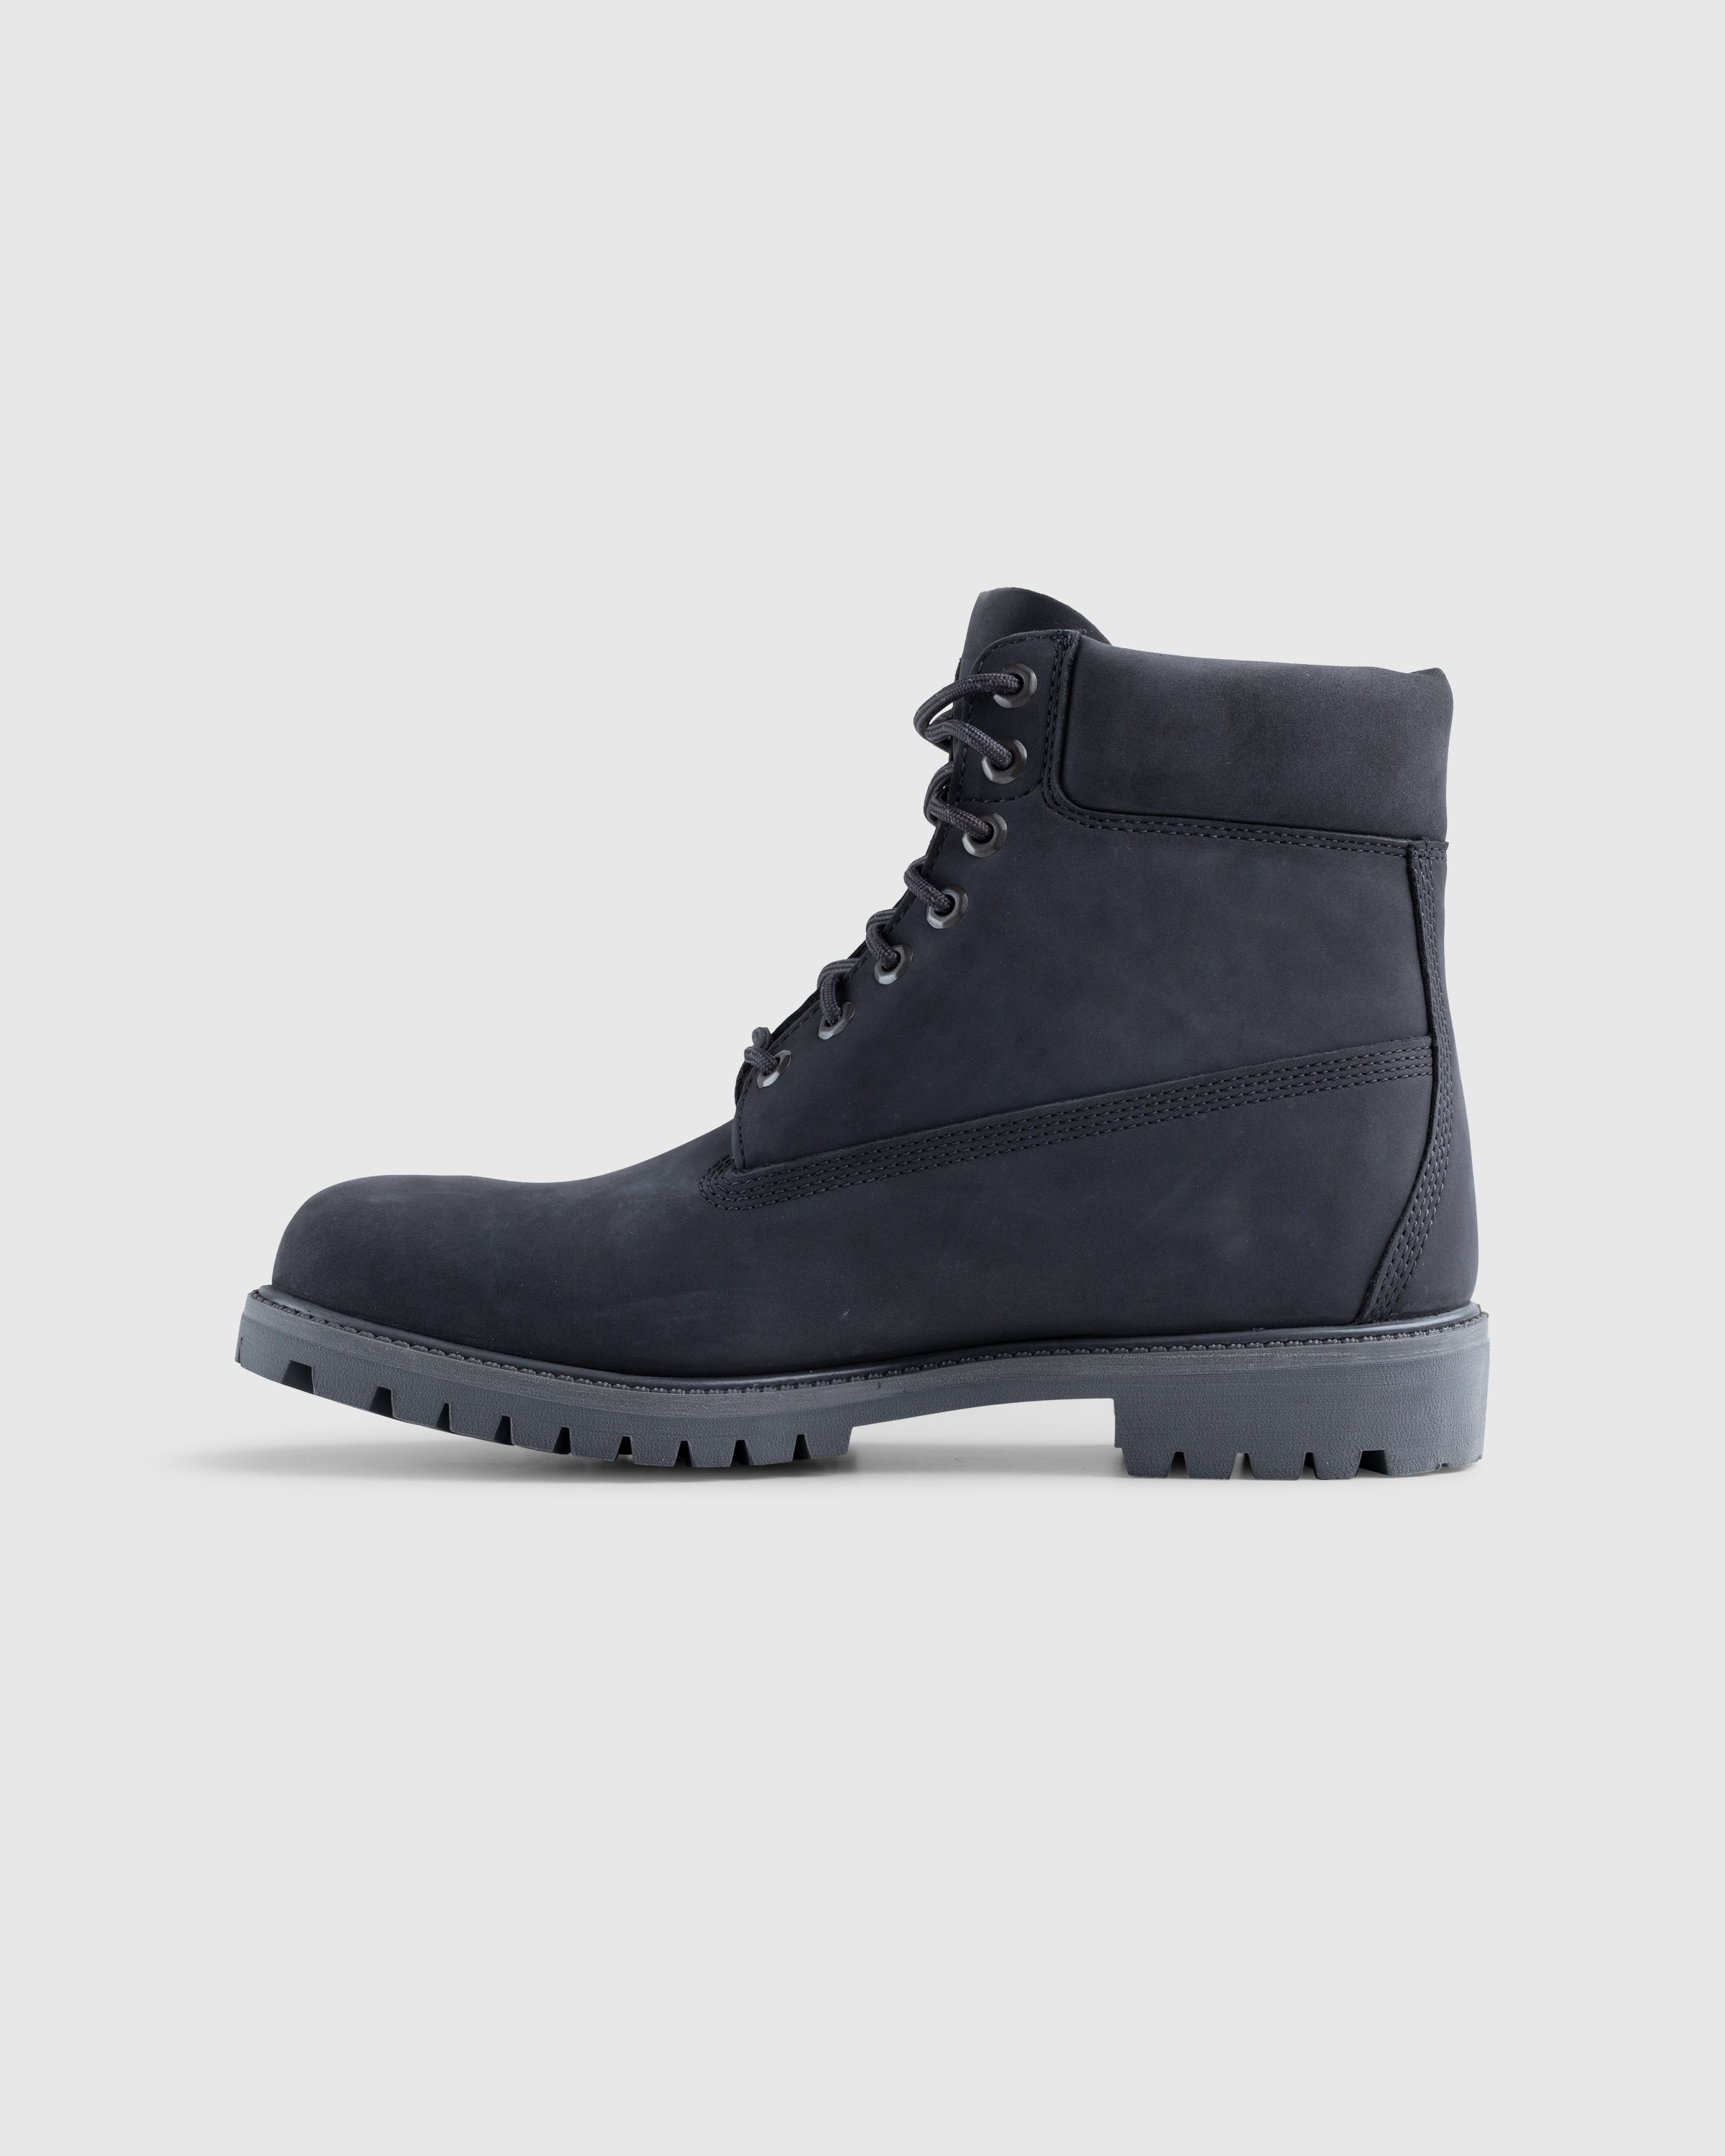 Timberland - 6 Inch Premium Boot Blackened Pearl - Footwear - Grey - Image 2